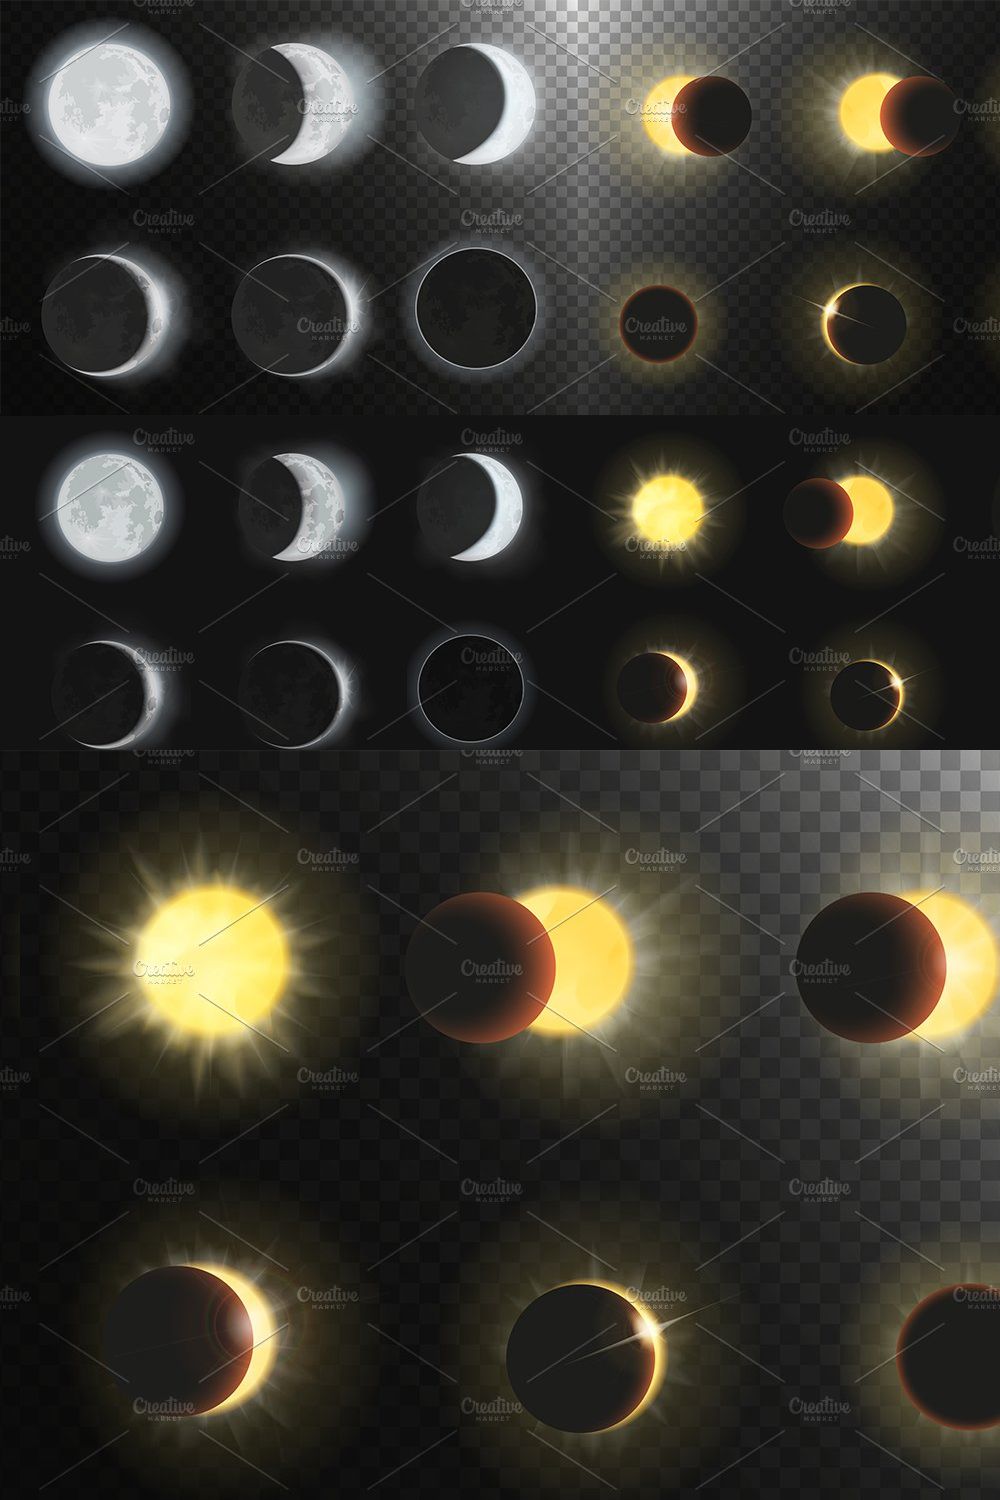 Solar & lunar eclipse phases set pinterest preview image.